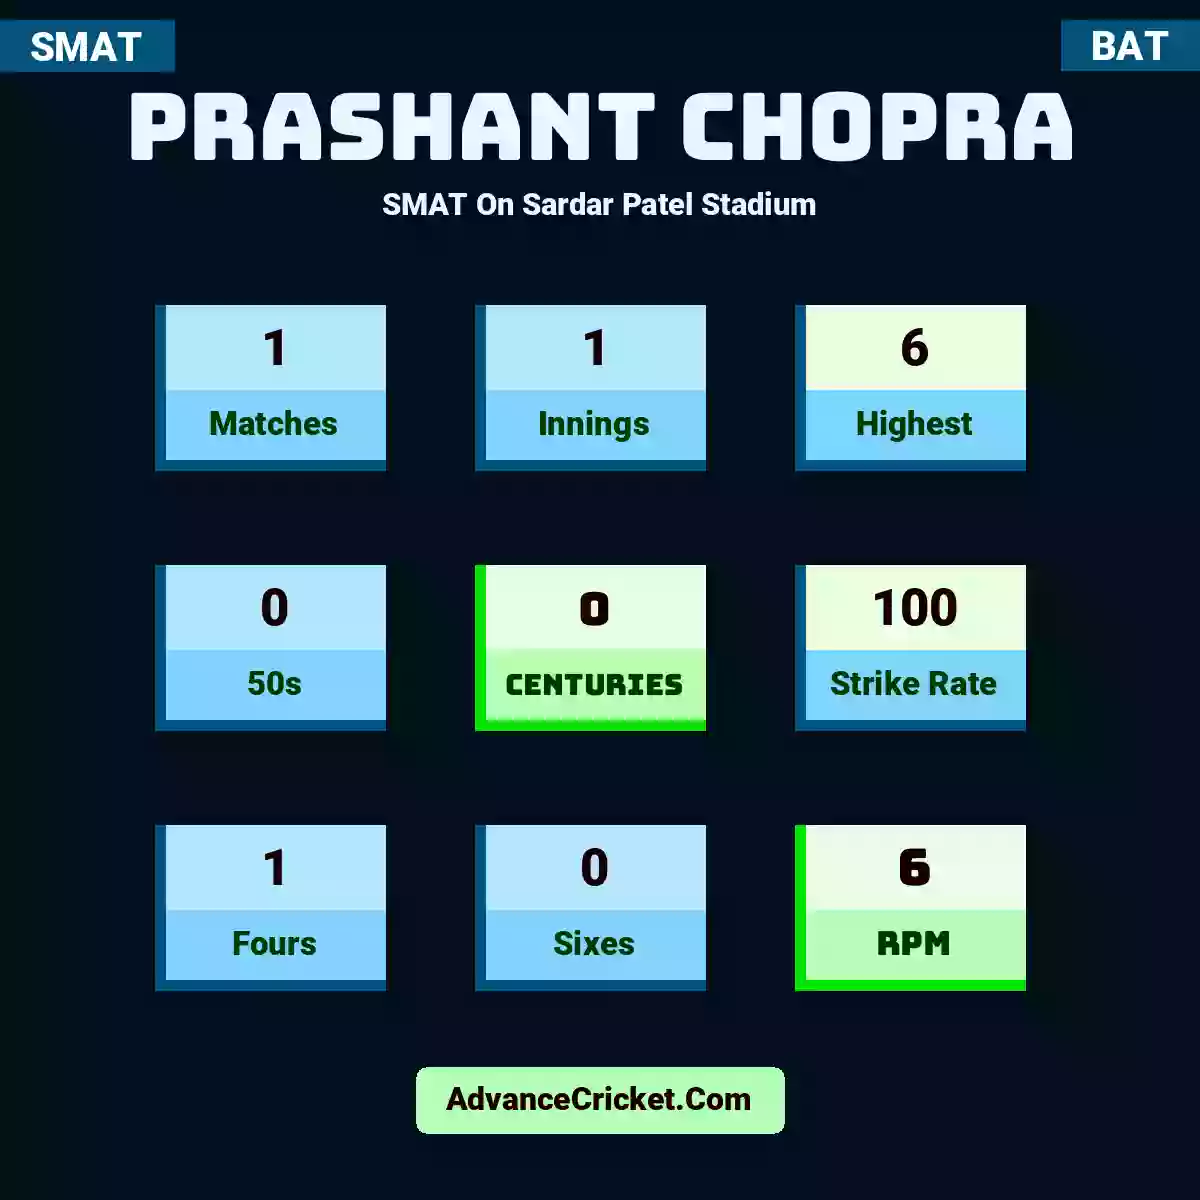 Prashant Chopra SMAT  On Sardar Patel Stadium, Prashant Chopra played 1 matches, scored 6 runs as highest, 0 half-centuries, and 0 centuries, with a strike rate of 100. P.Chopra hit 1 fours and 0 sixes, with an RPM of 6.